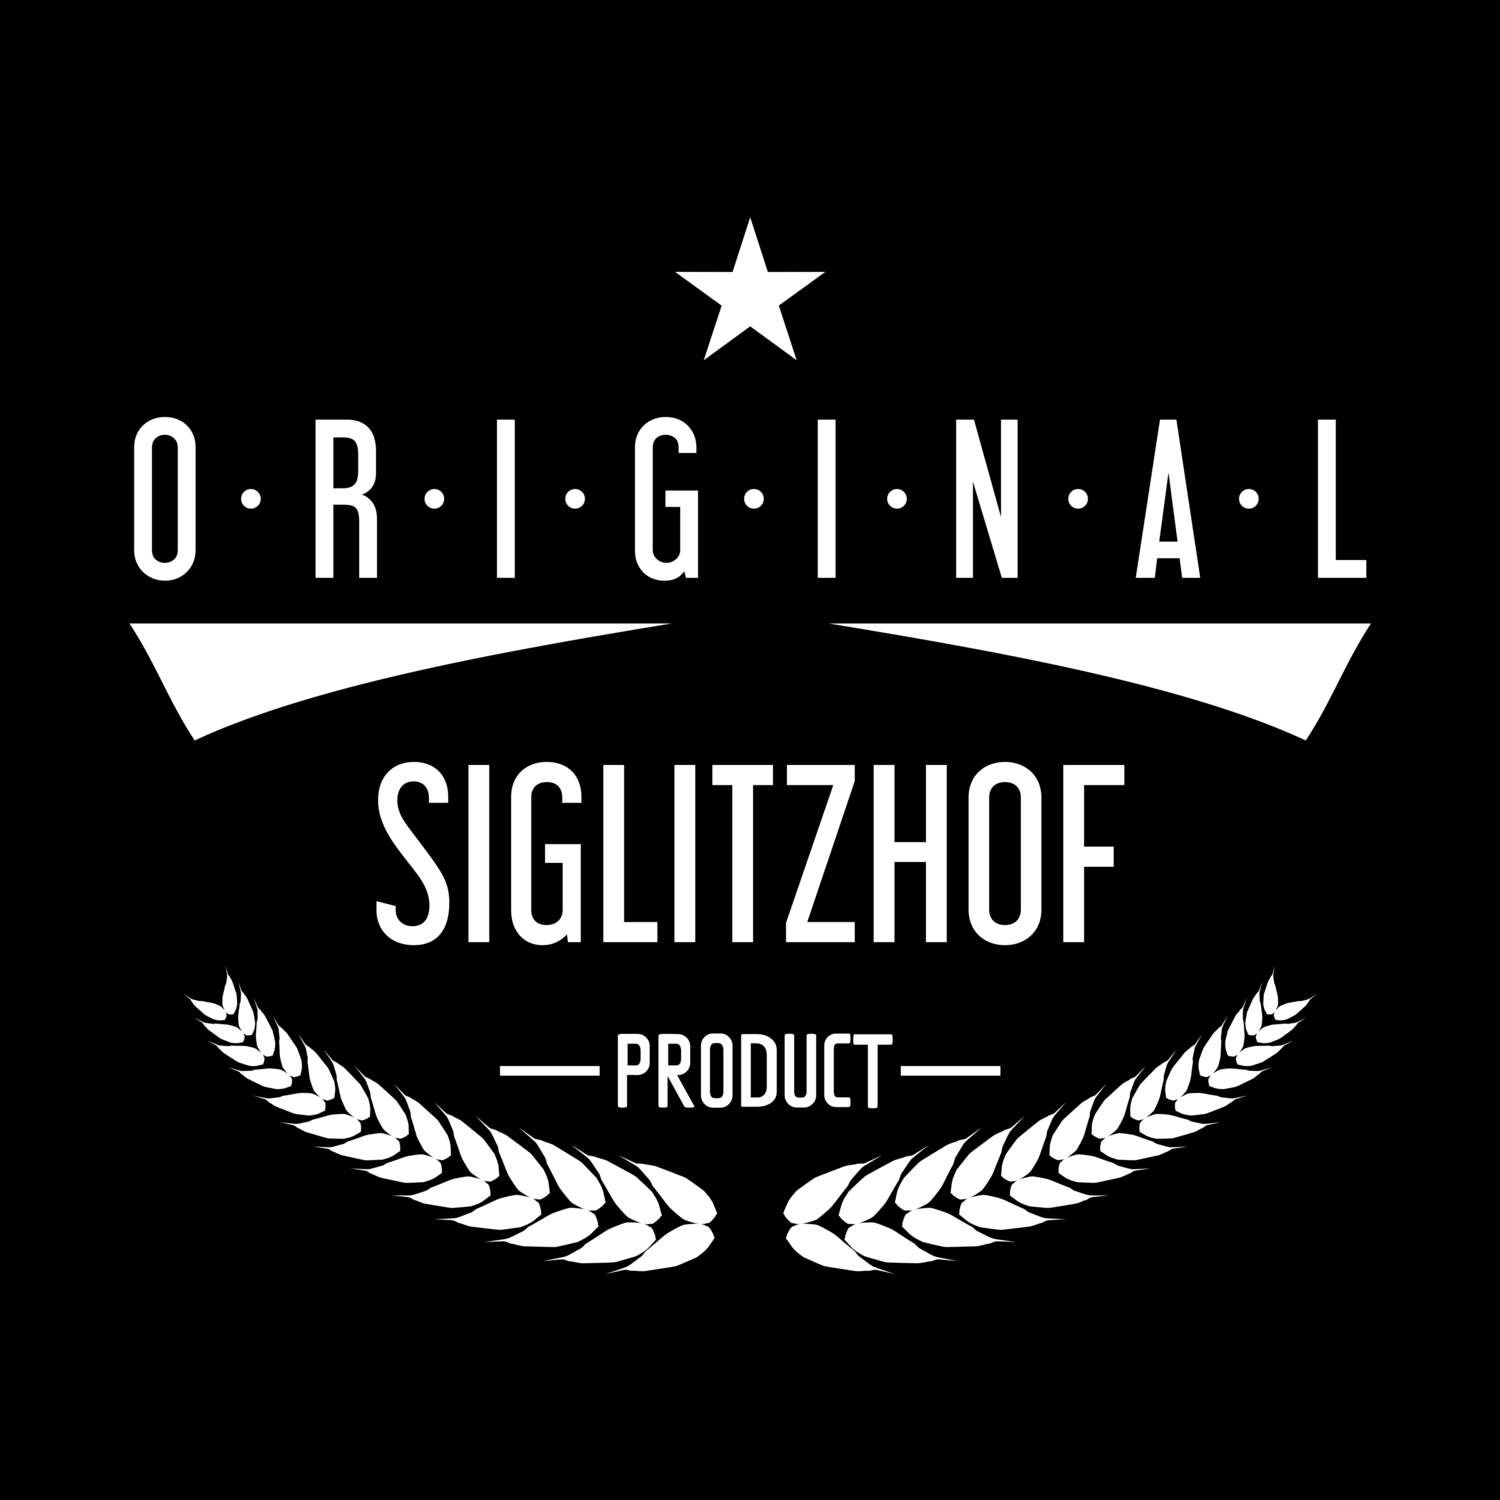 Siglitzhof T-Shirt »Original Product«